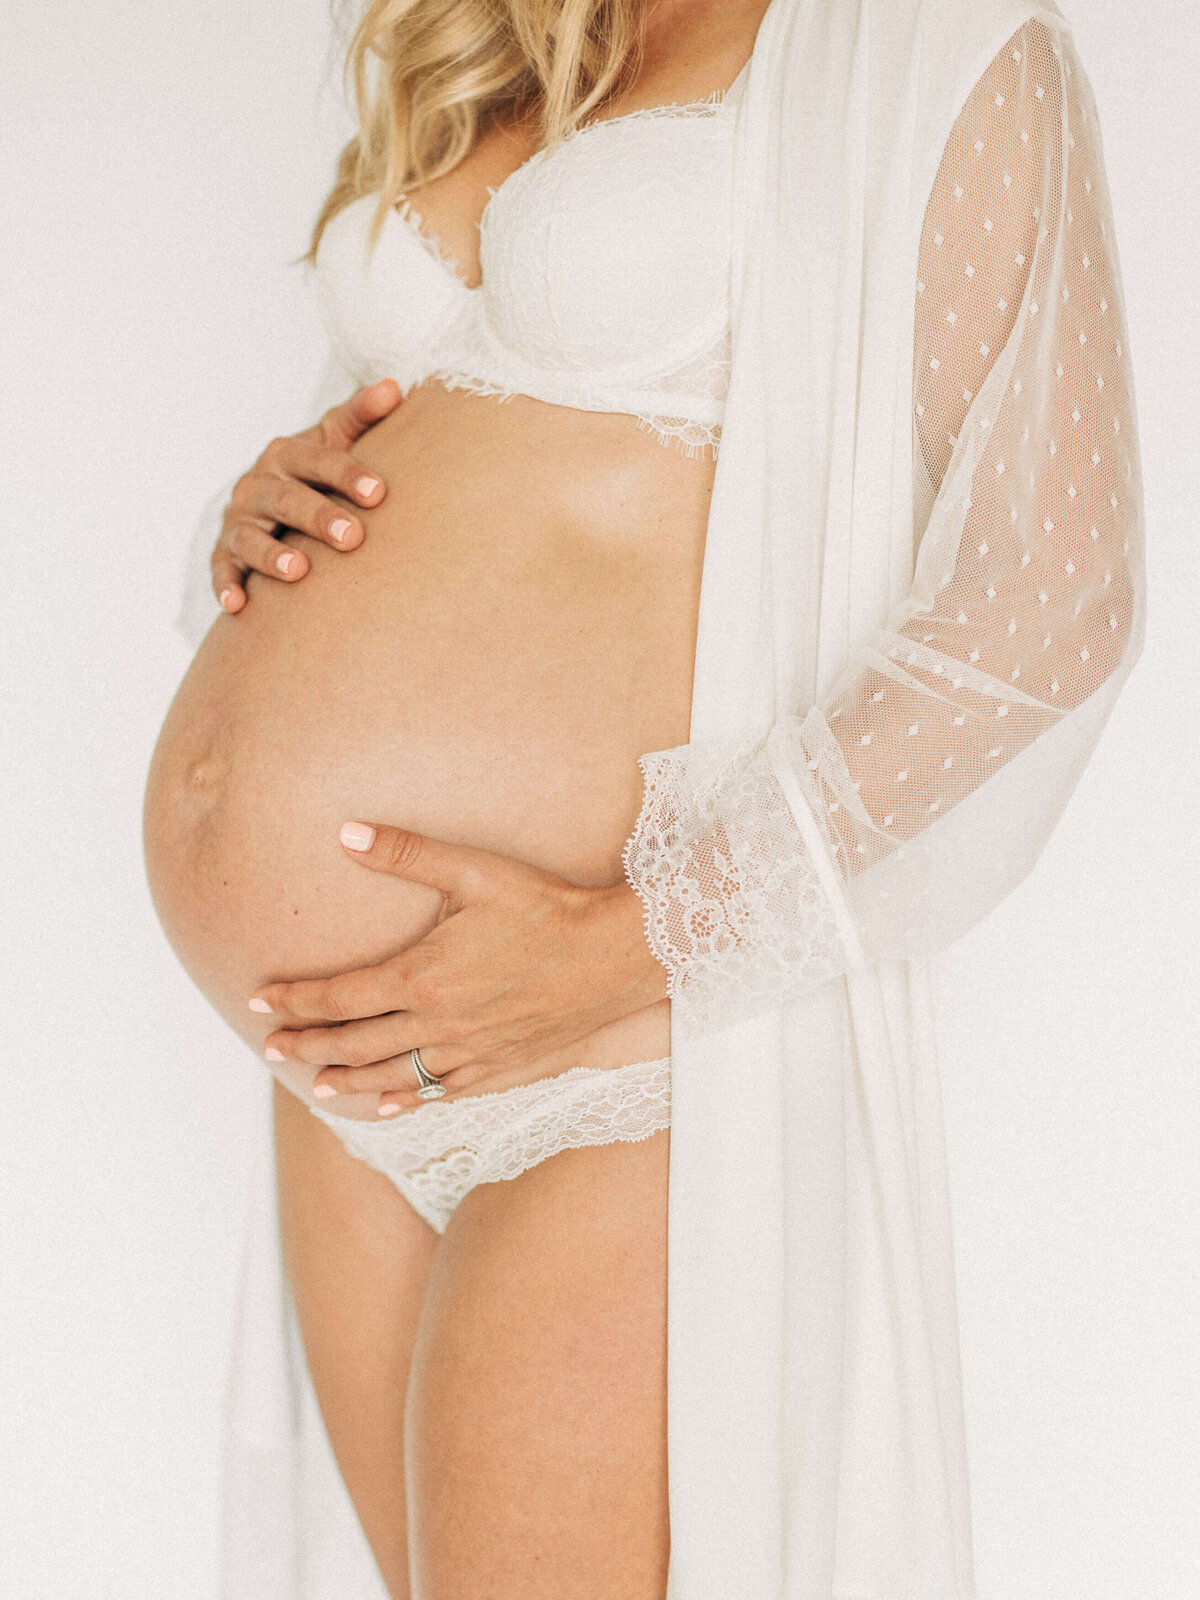 los-angeles-maternity-photographer-109